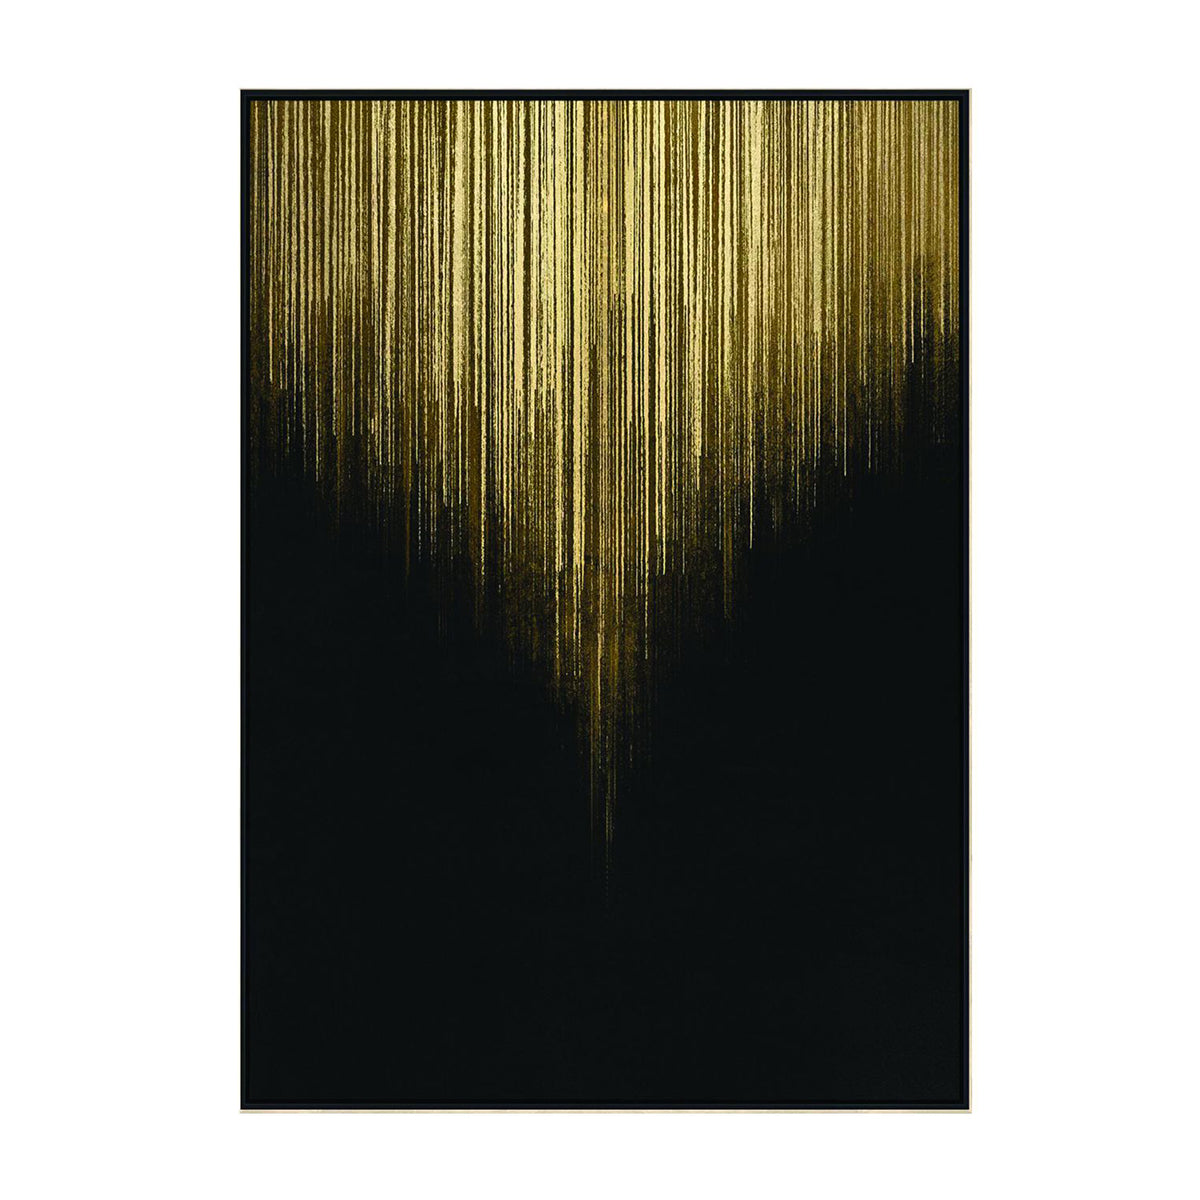 Gerahmte Leinwand mit goldenem Regen, 140 x 100 cm